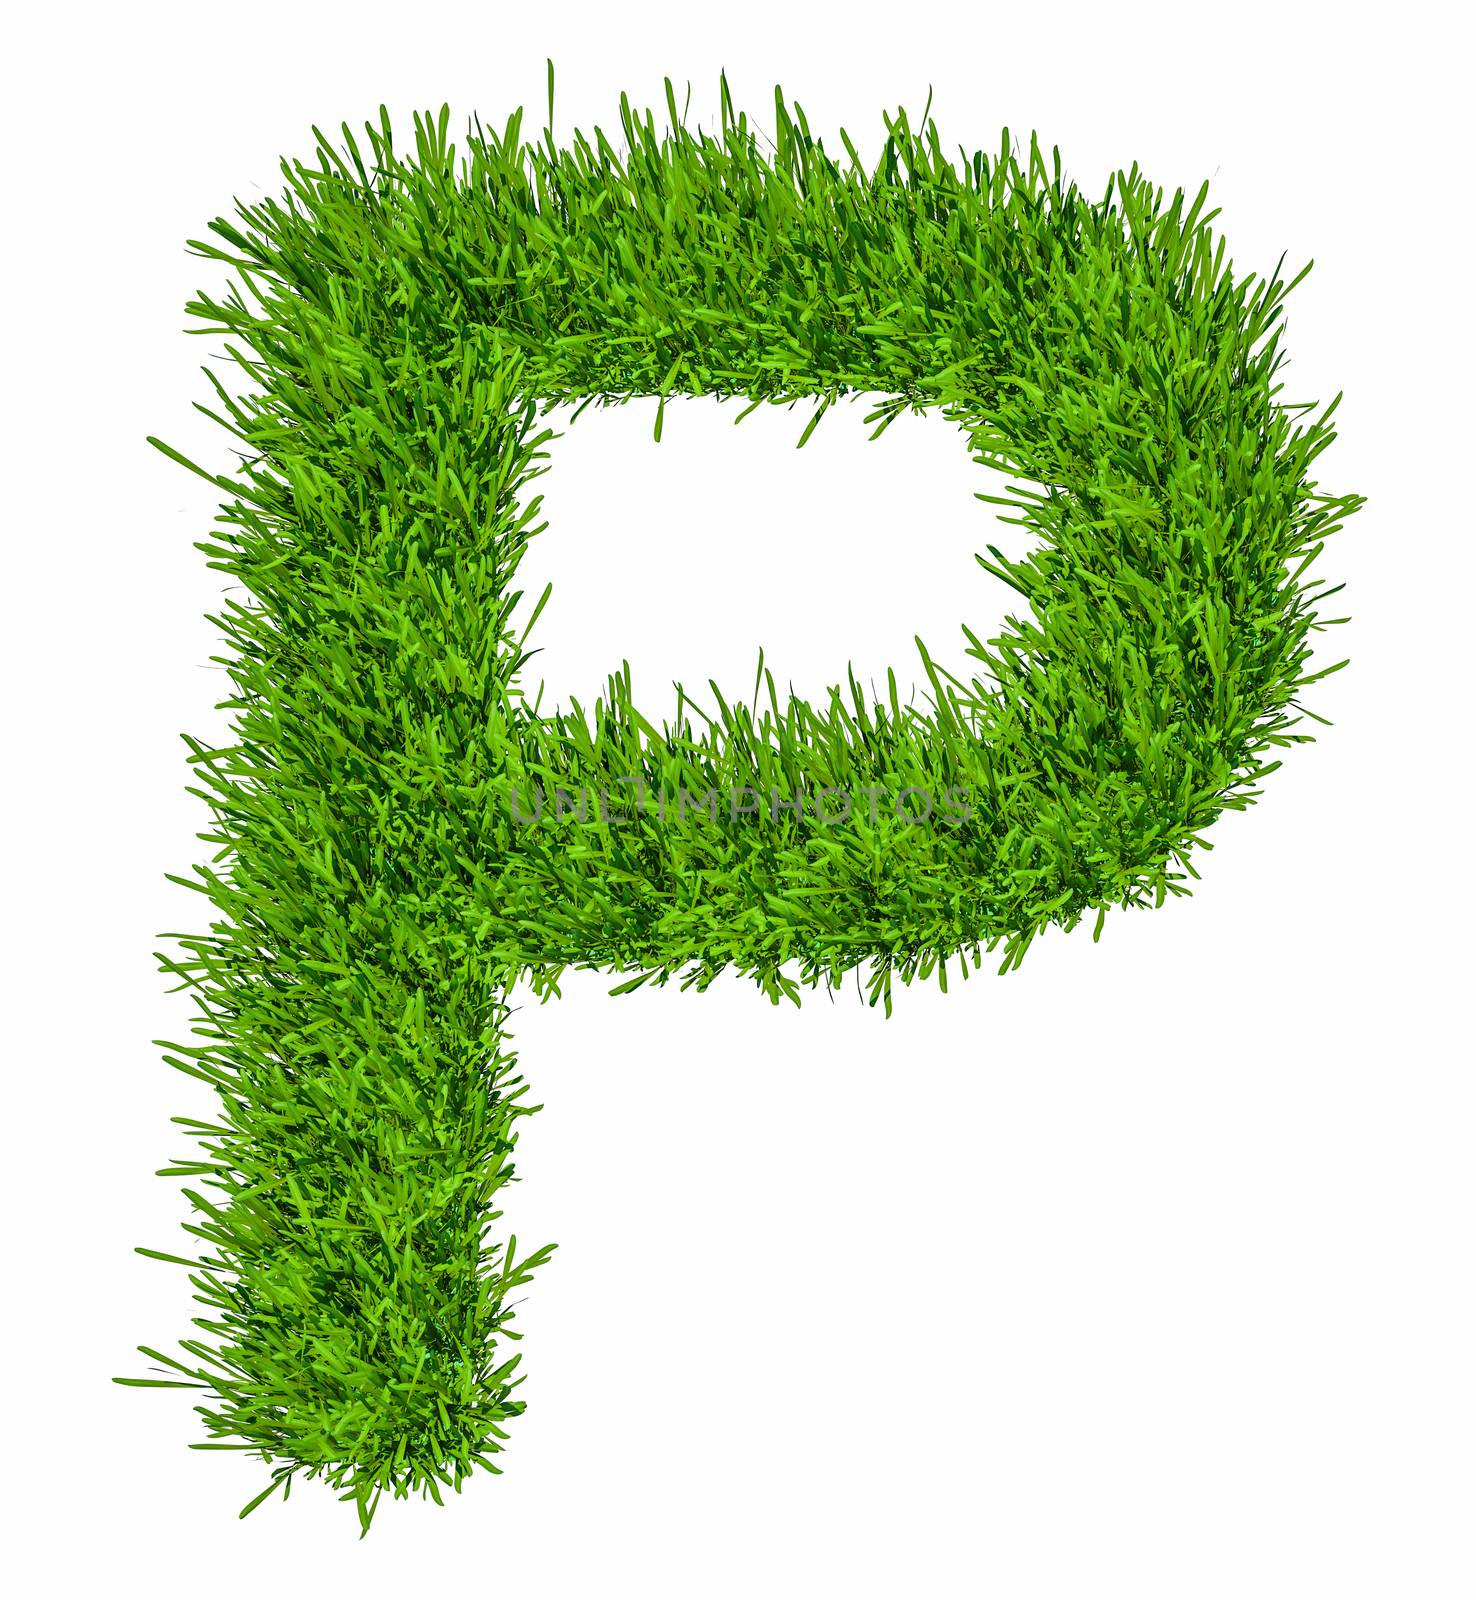 Letter of grass alphabet. Grass letter P isolated on white background. 3d illustration